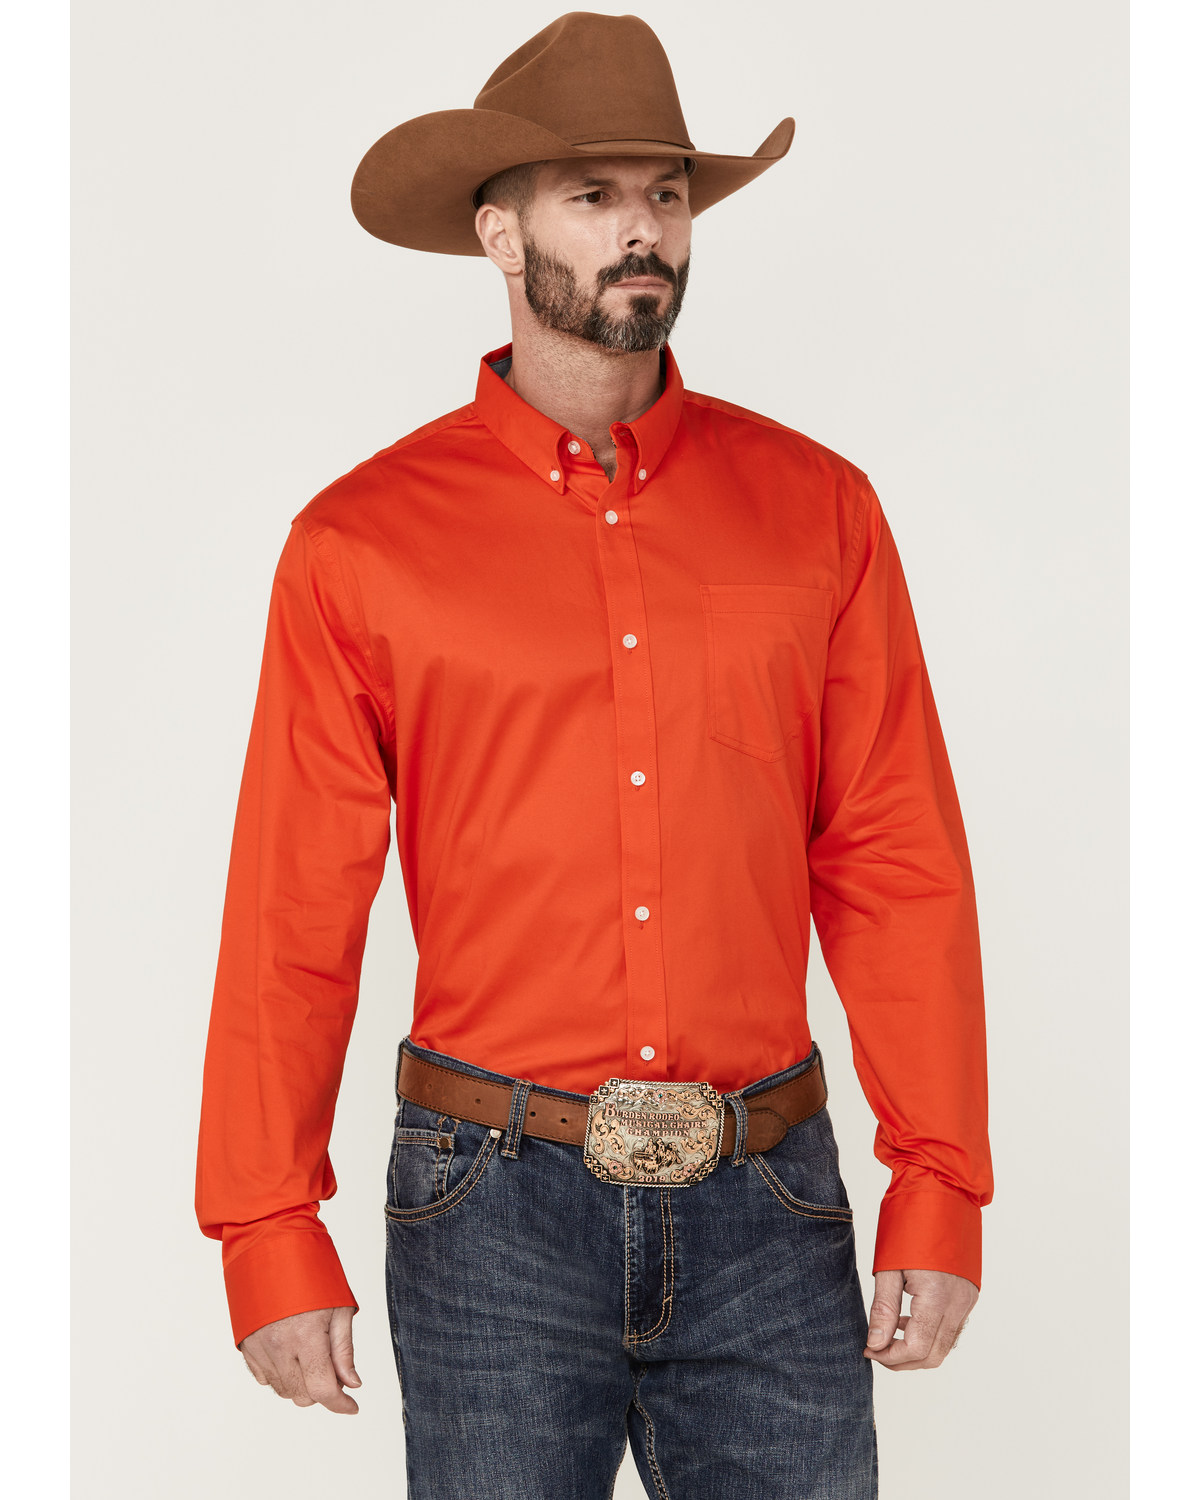 RANK 45® Men's Basic Twill Long Sleeve Button-Down Western Shirt